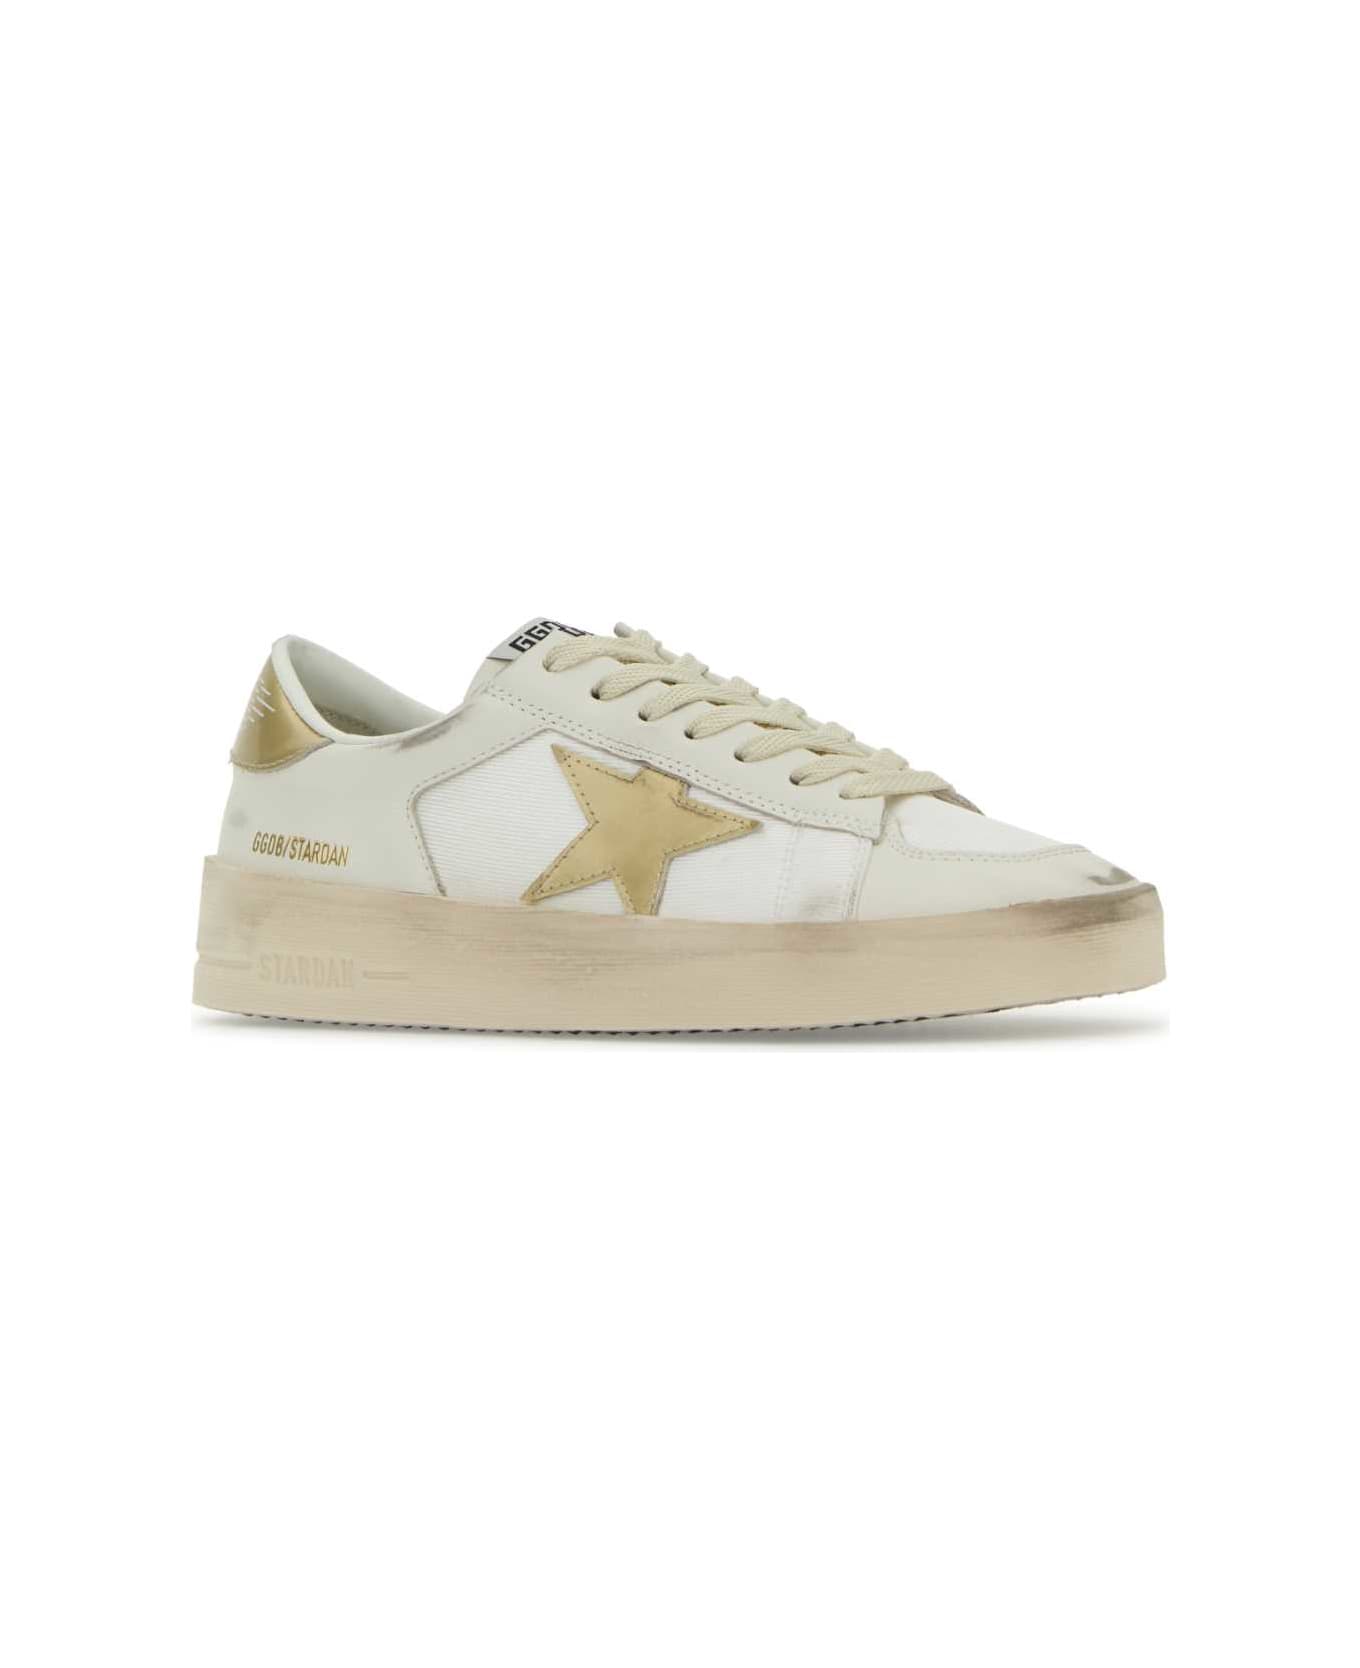 Golden Goose White Leather Stardan Sneakers - WHITEGOLD